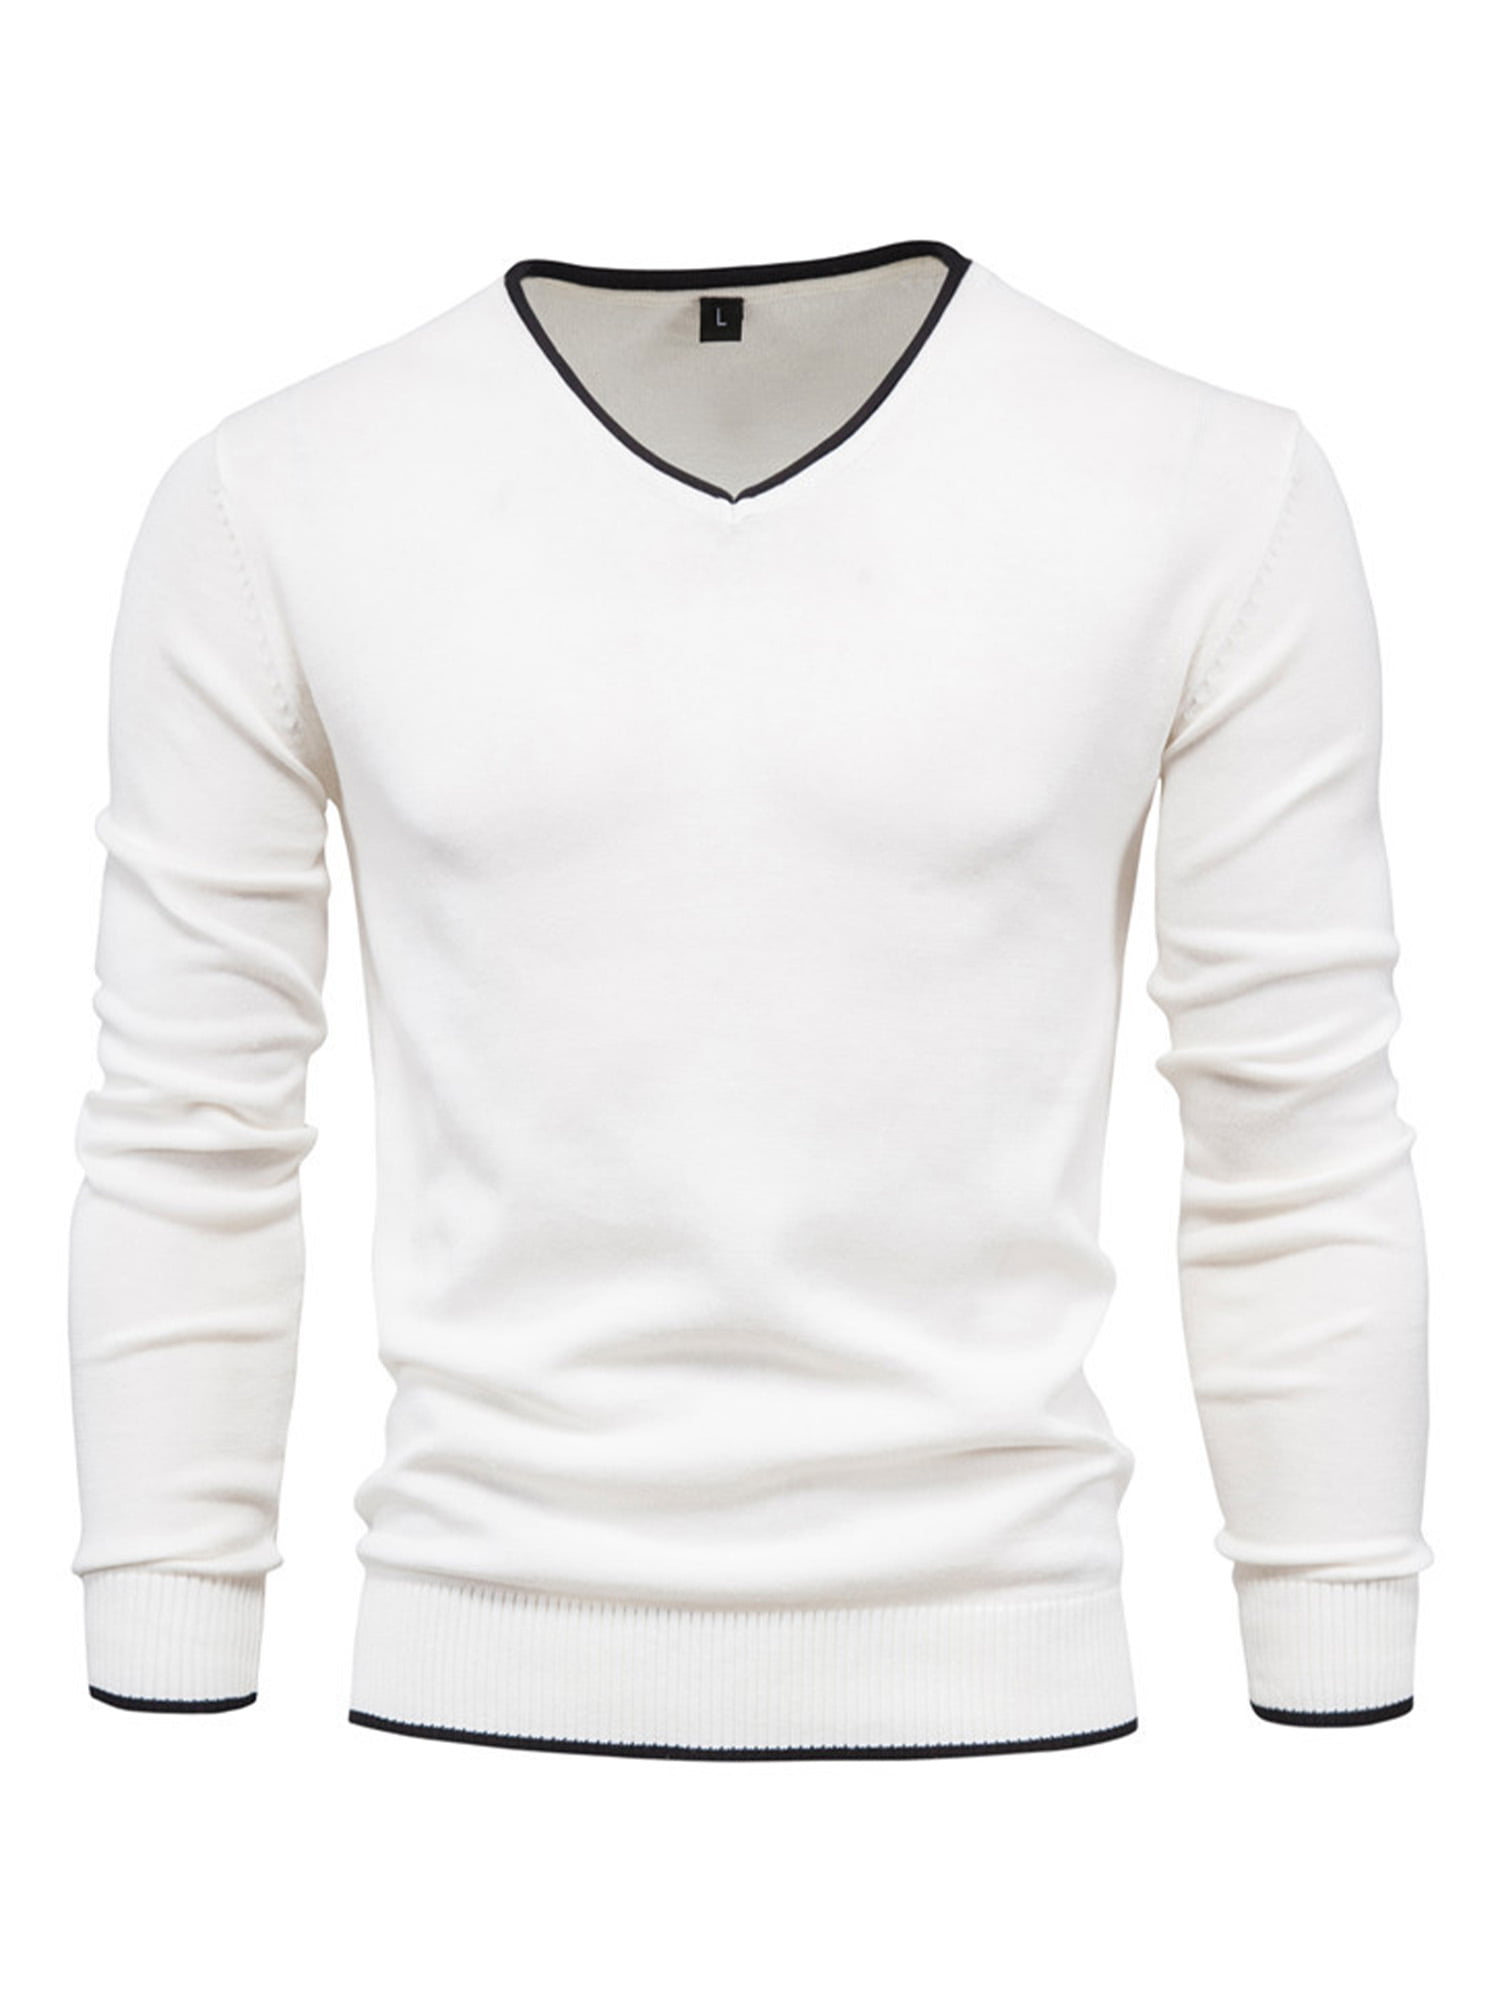 MOCOTONO Men's Jumper V-Neck Sweater Long Sleeve Comfortable Polyester Knit Sweatshirt